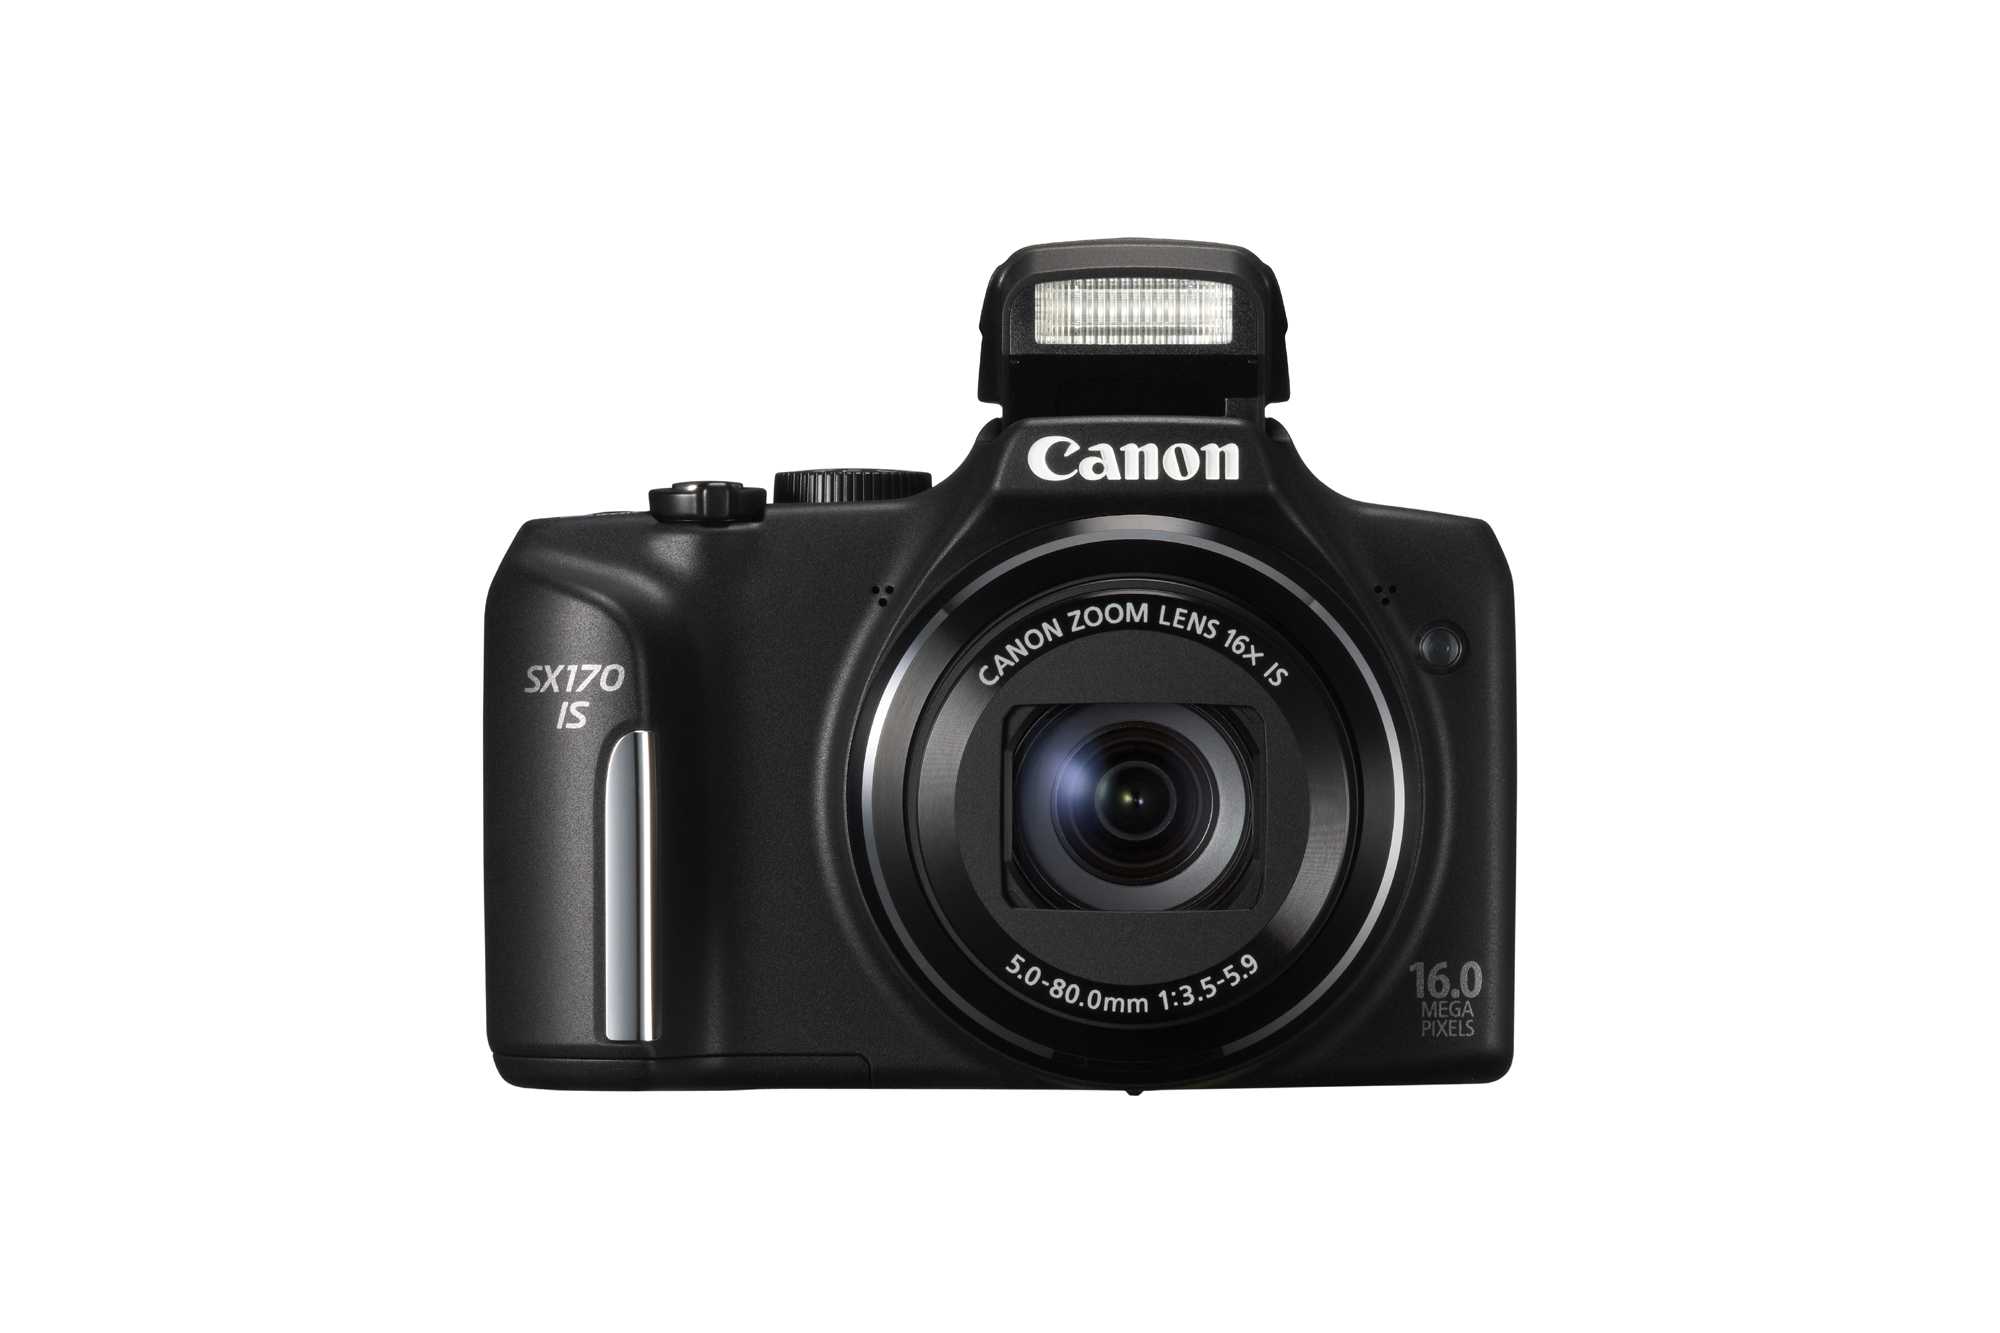 Фотоаппарат canon powershot sx170 is red — купить, цена и характеристики, отзывы